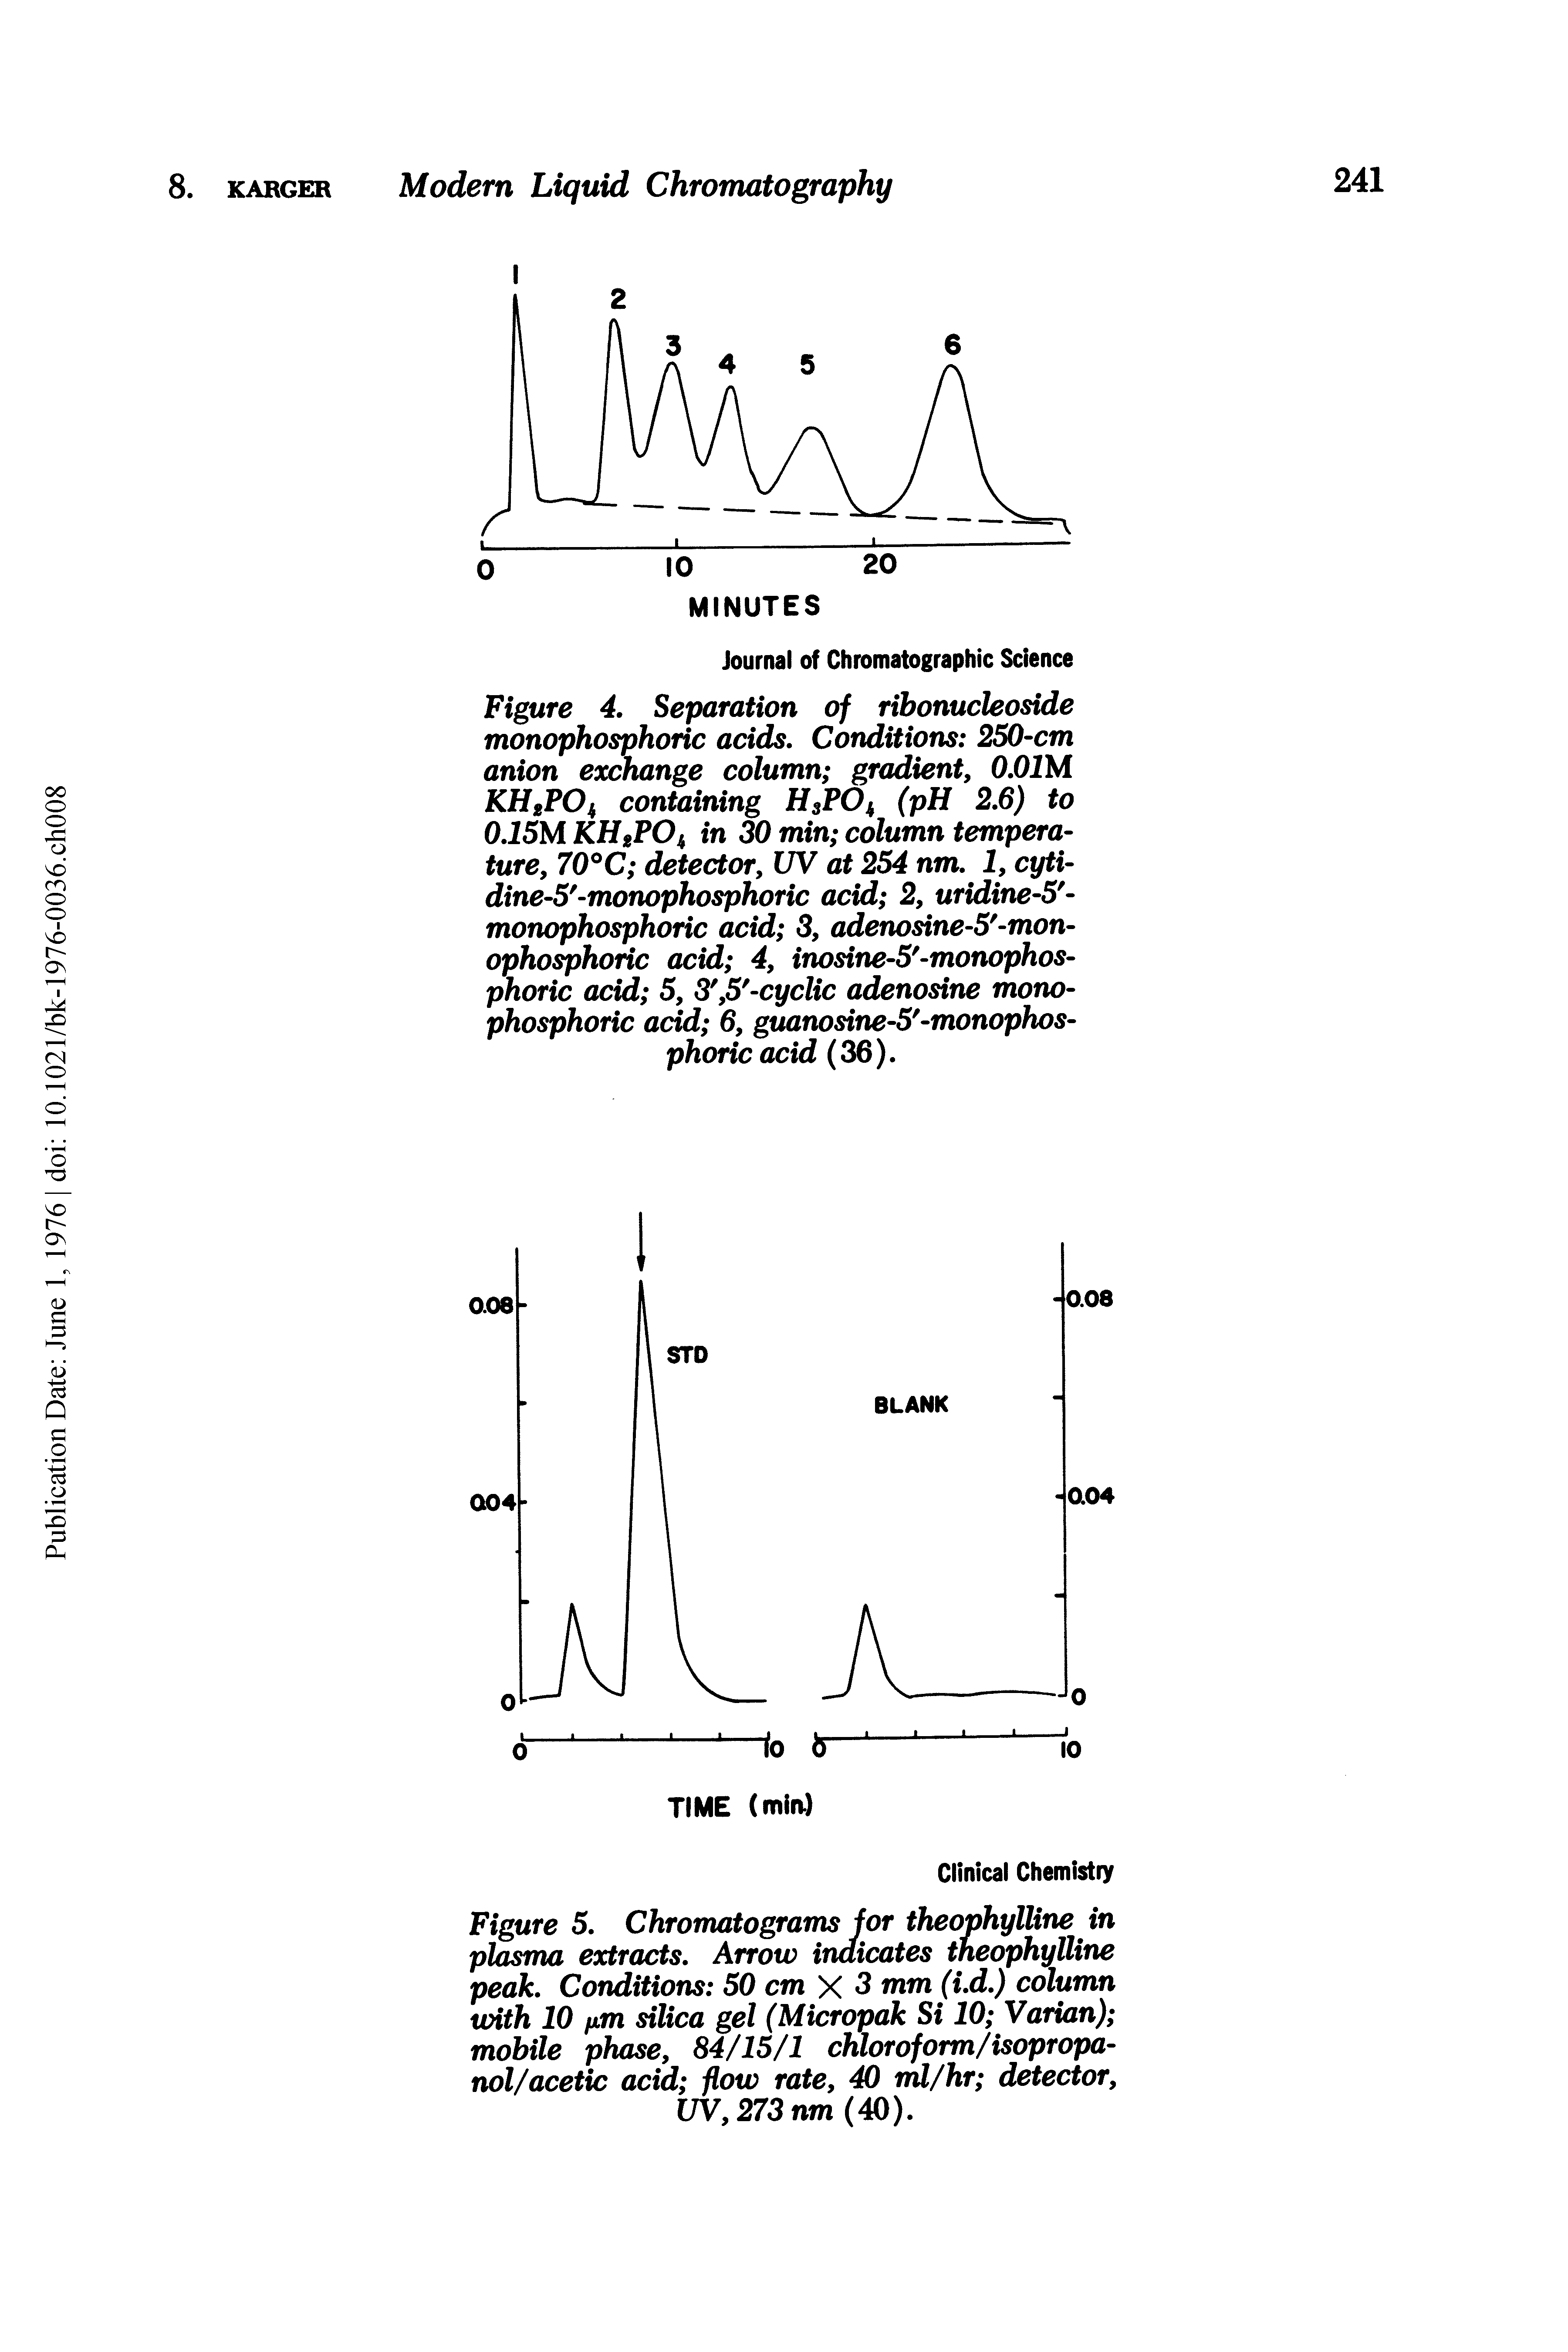 Figure 4. Separation of ribonucleoside monophosphofic acids. Conditions 250-cm anion exchange column gradient, 0.01M KHgPO containing HsPOi, (pH 2.6) to 0.15M KHiFO in 30 min column tempera-ture, 70 C detector, UV at 254 nm. 1, cyti-dine-S -monophosphoric acid 2, uridine-5 -monophosphoric acid 3, adenosine-5 -mon-ophosphofic acid 4, inosine-5 -monophosphoric acid 5, 3, 5 -cyclic adenosine mono-phosphoric add 6, guanosine-5 -monophosphoric acid (36).